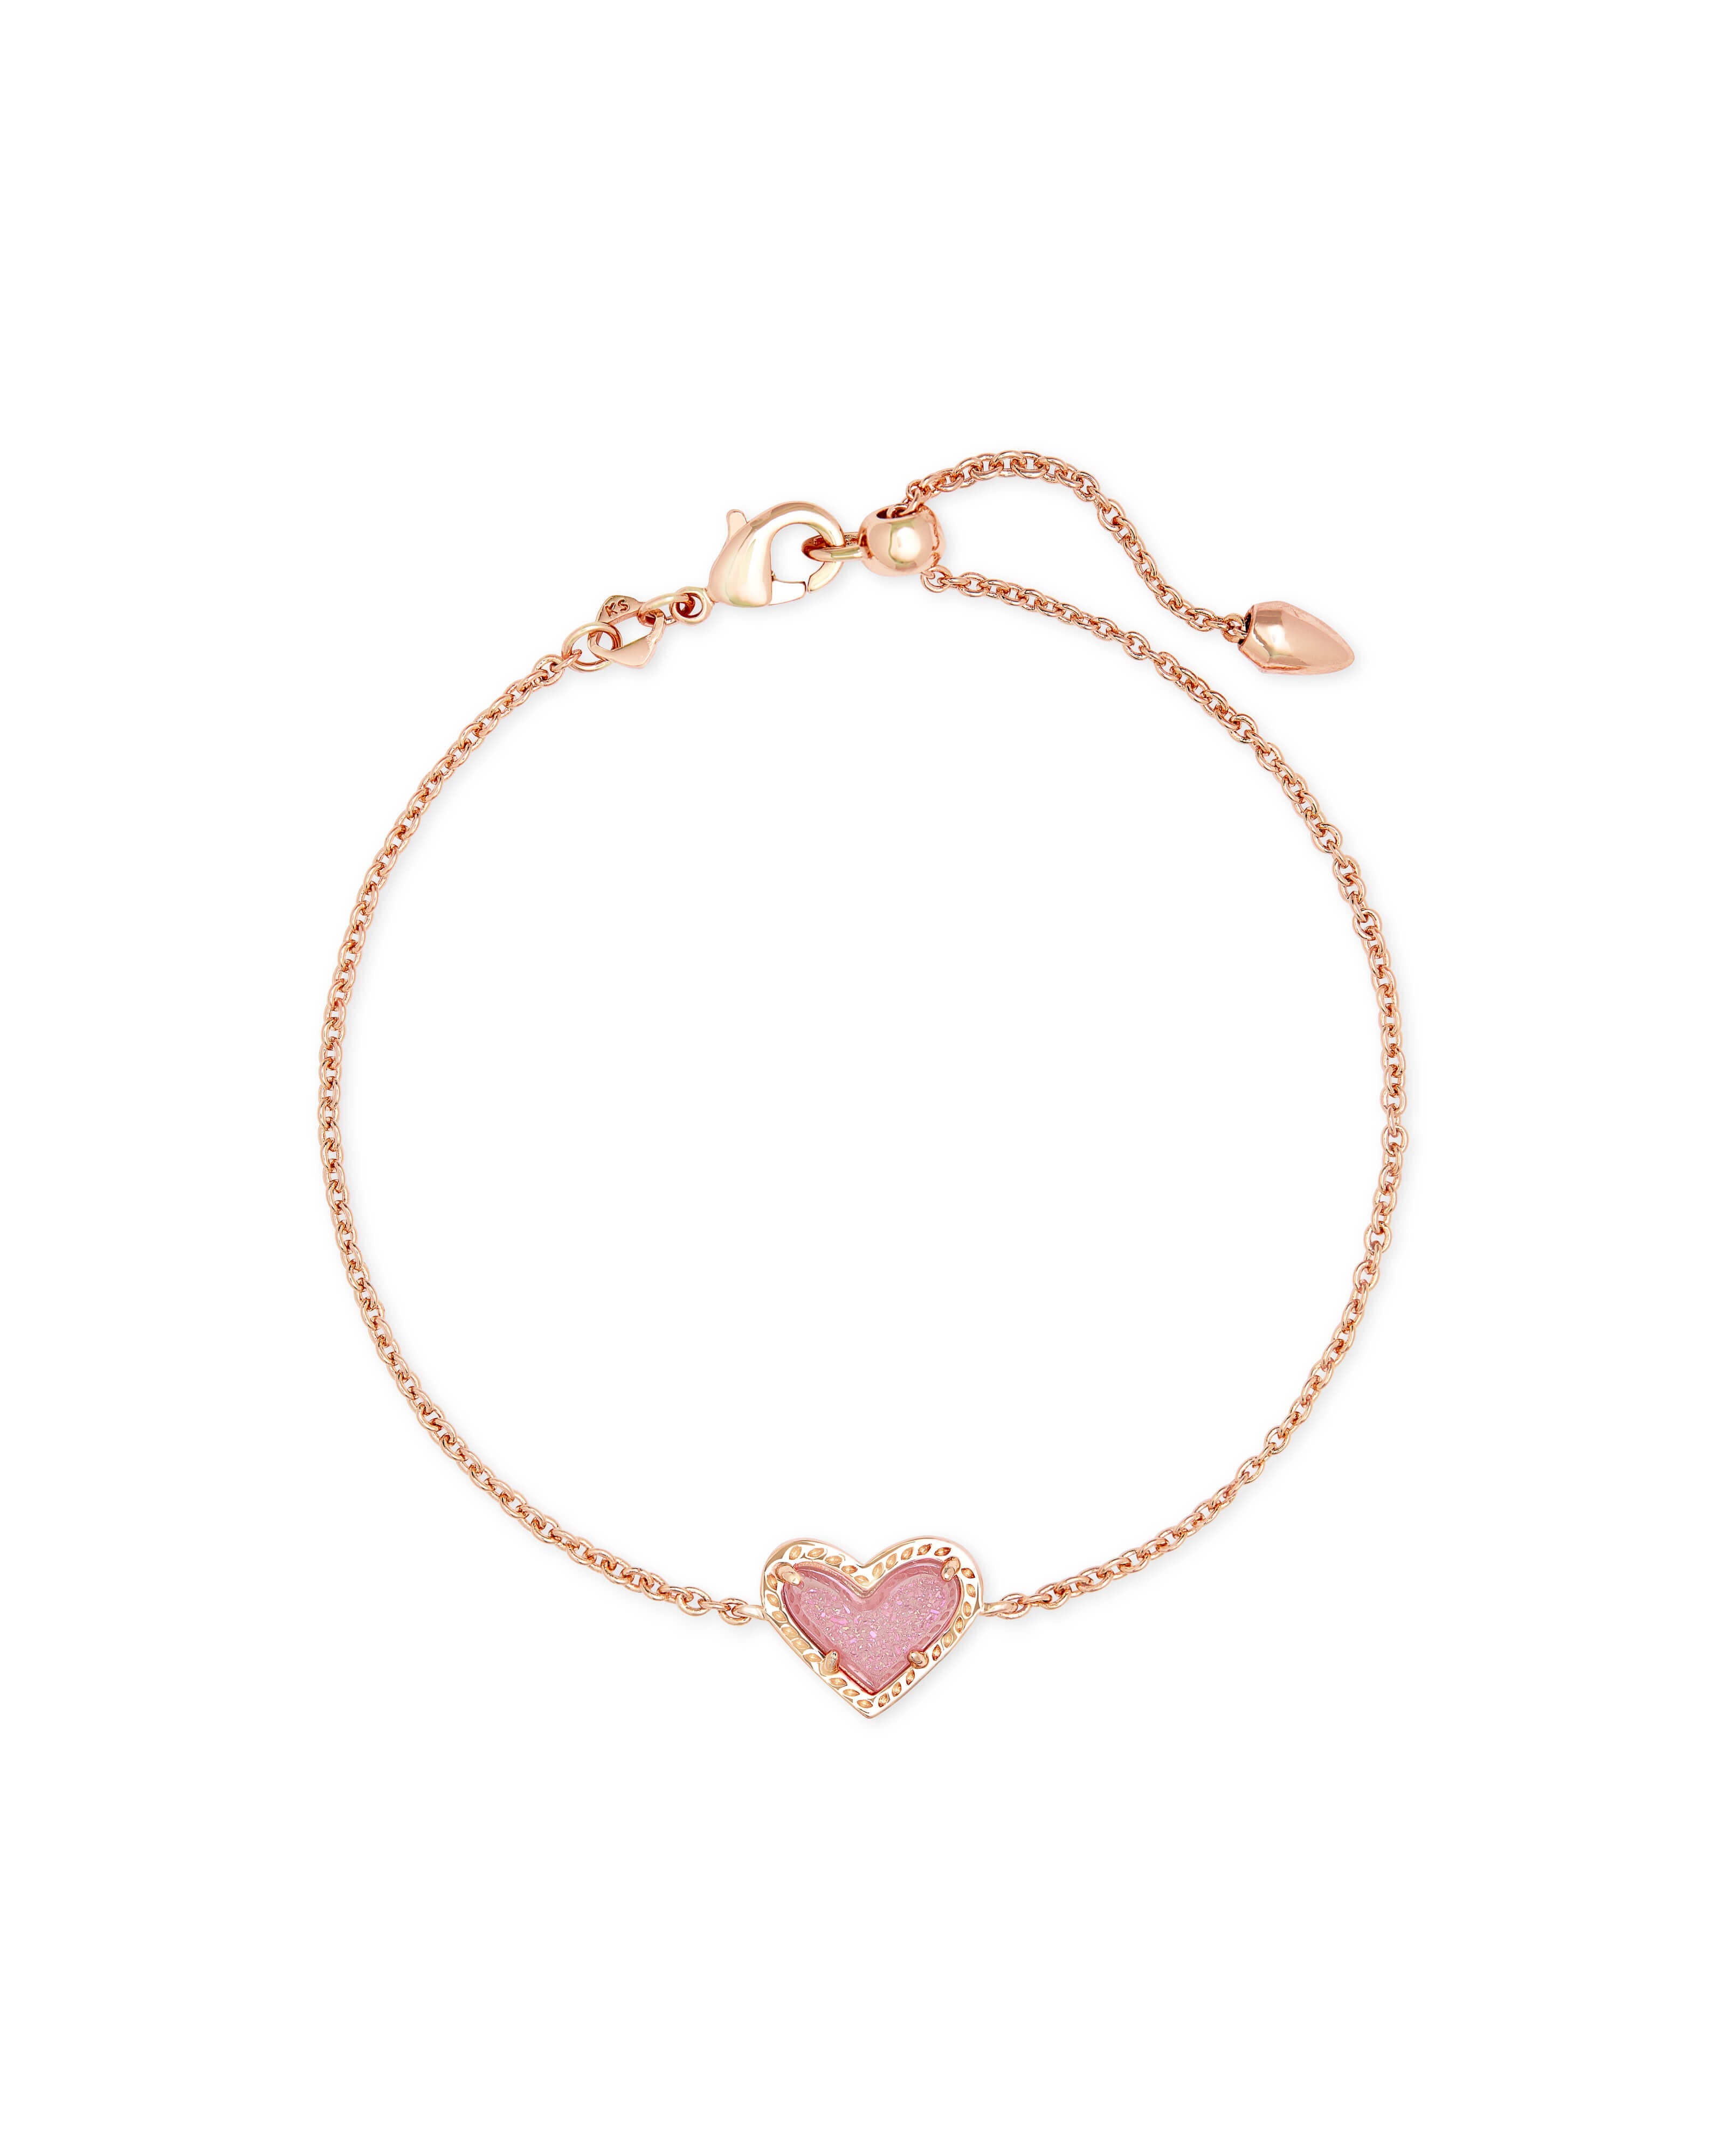 Ari Heart Drusy Bracelet - New Colors 5/24